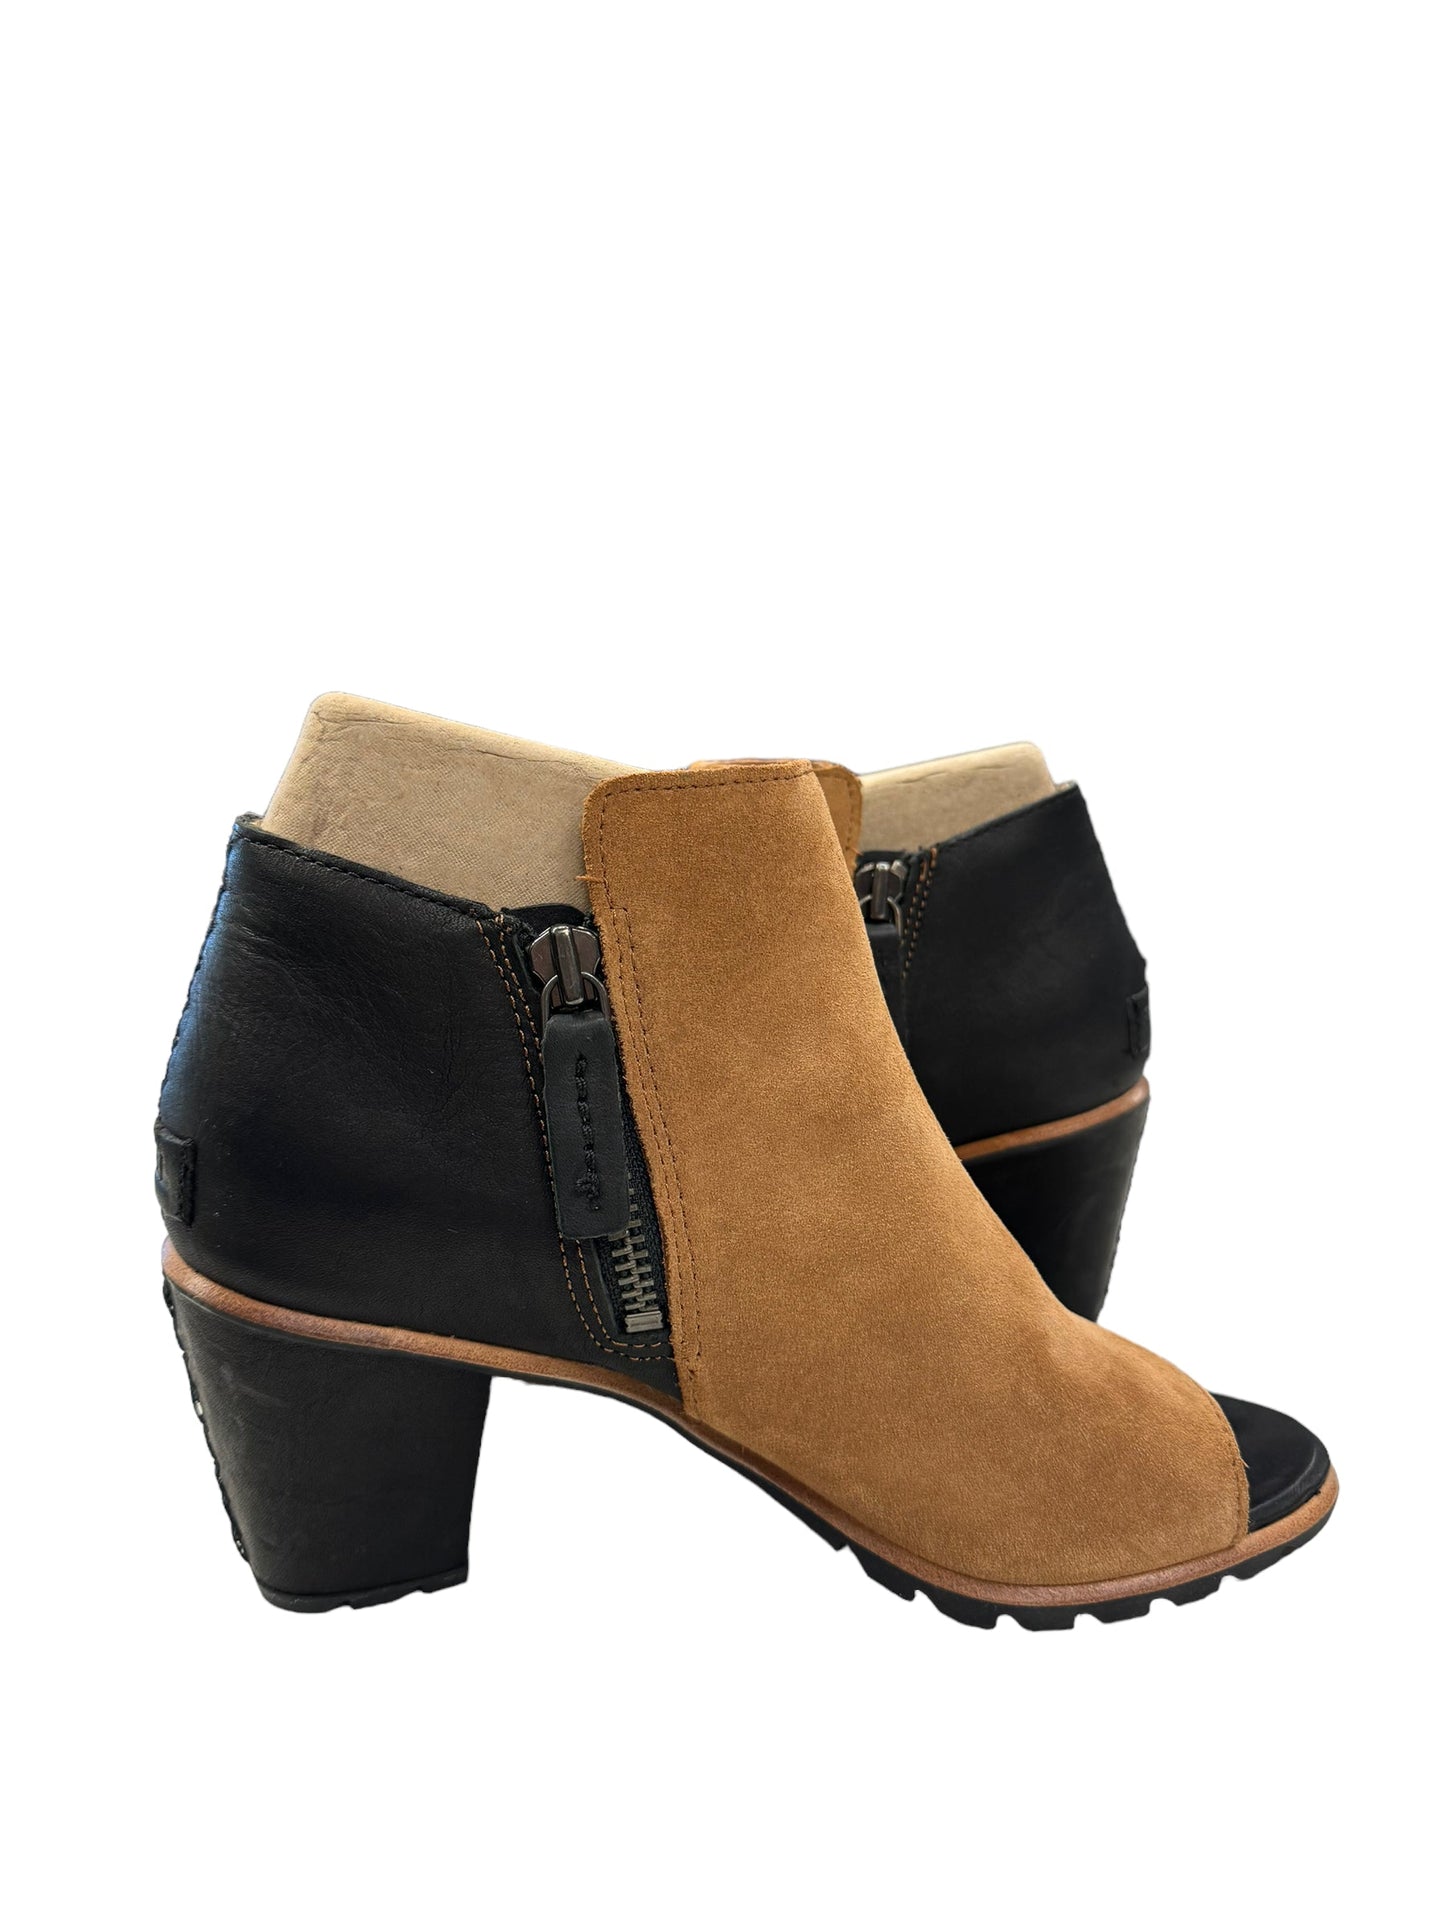 Black & Brown Shoes Heels Block Sorel, Size 8.5